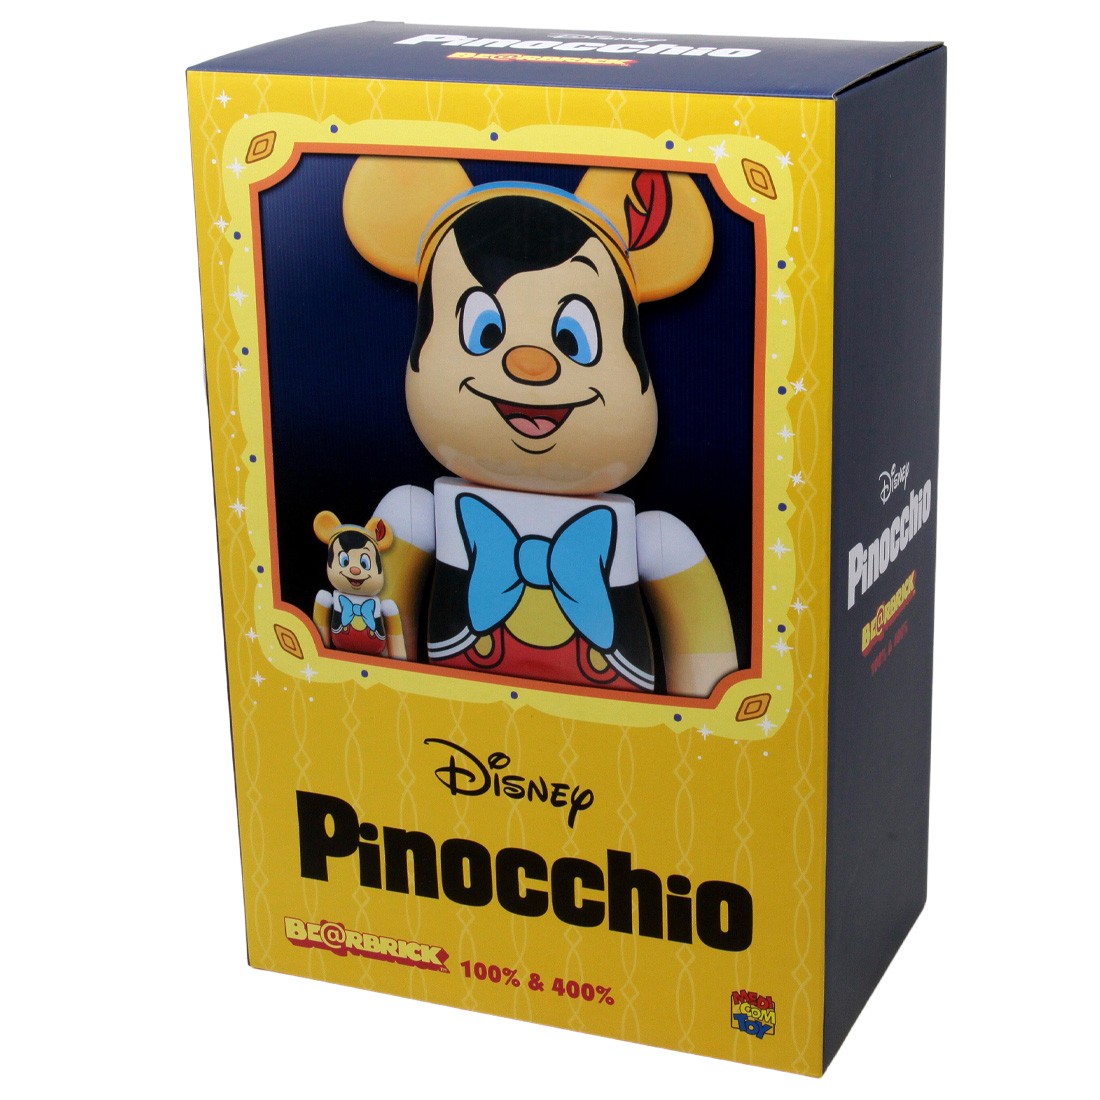 Medicom Disney Pinocchio 100% 400% Bearbrick Figure Set (yellow)